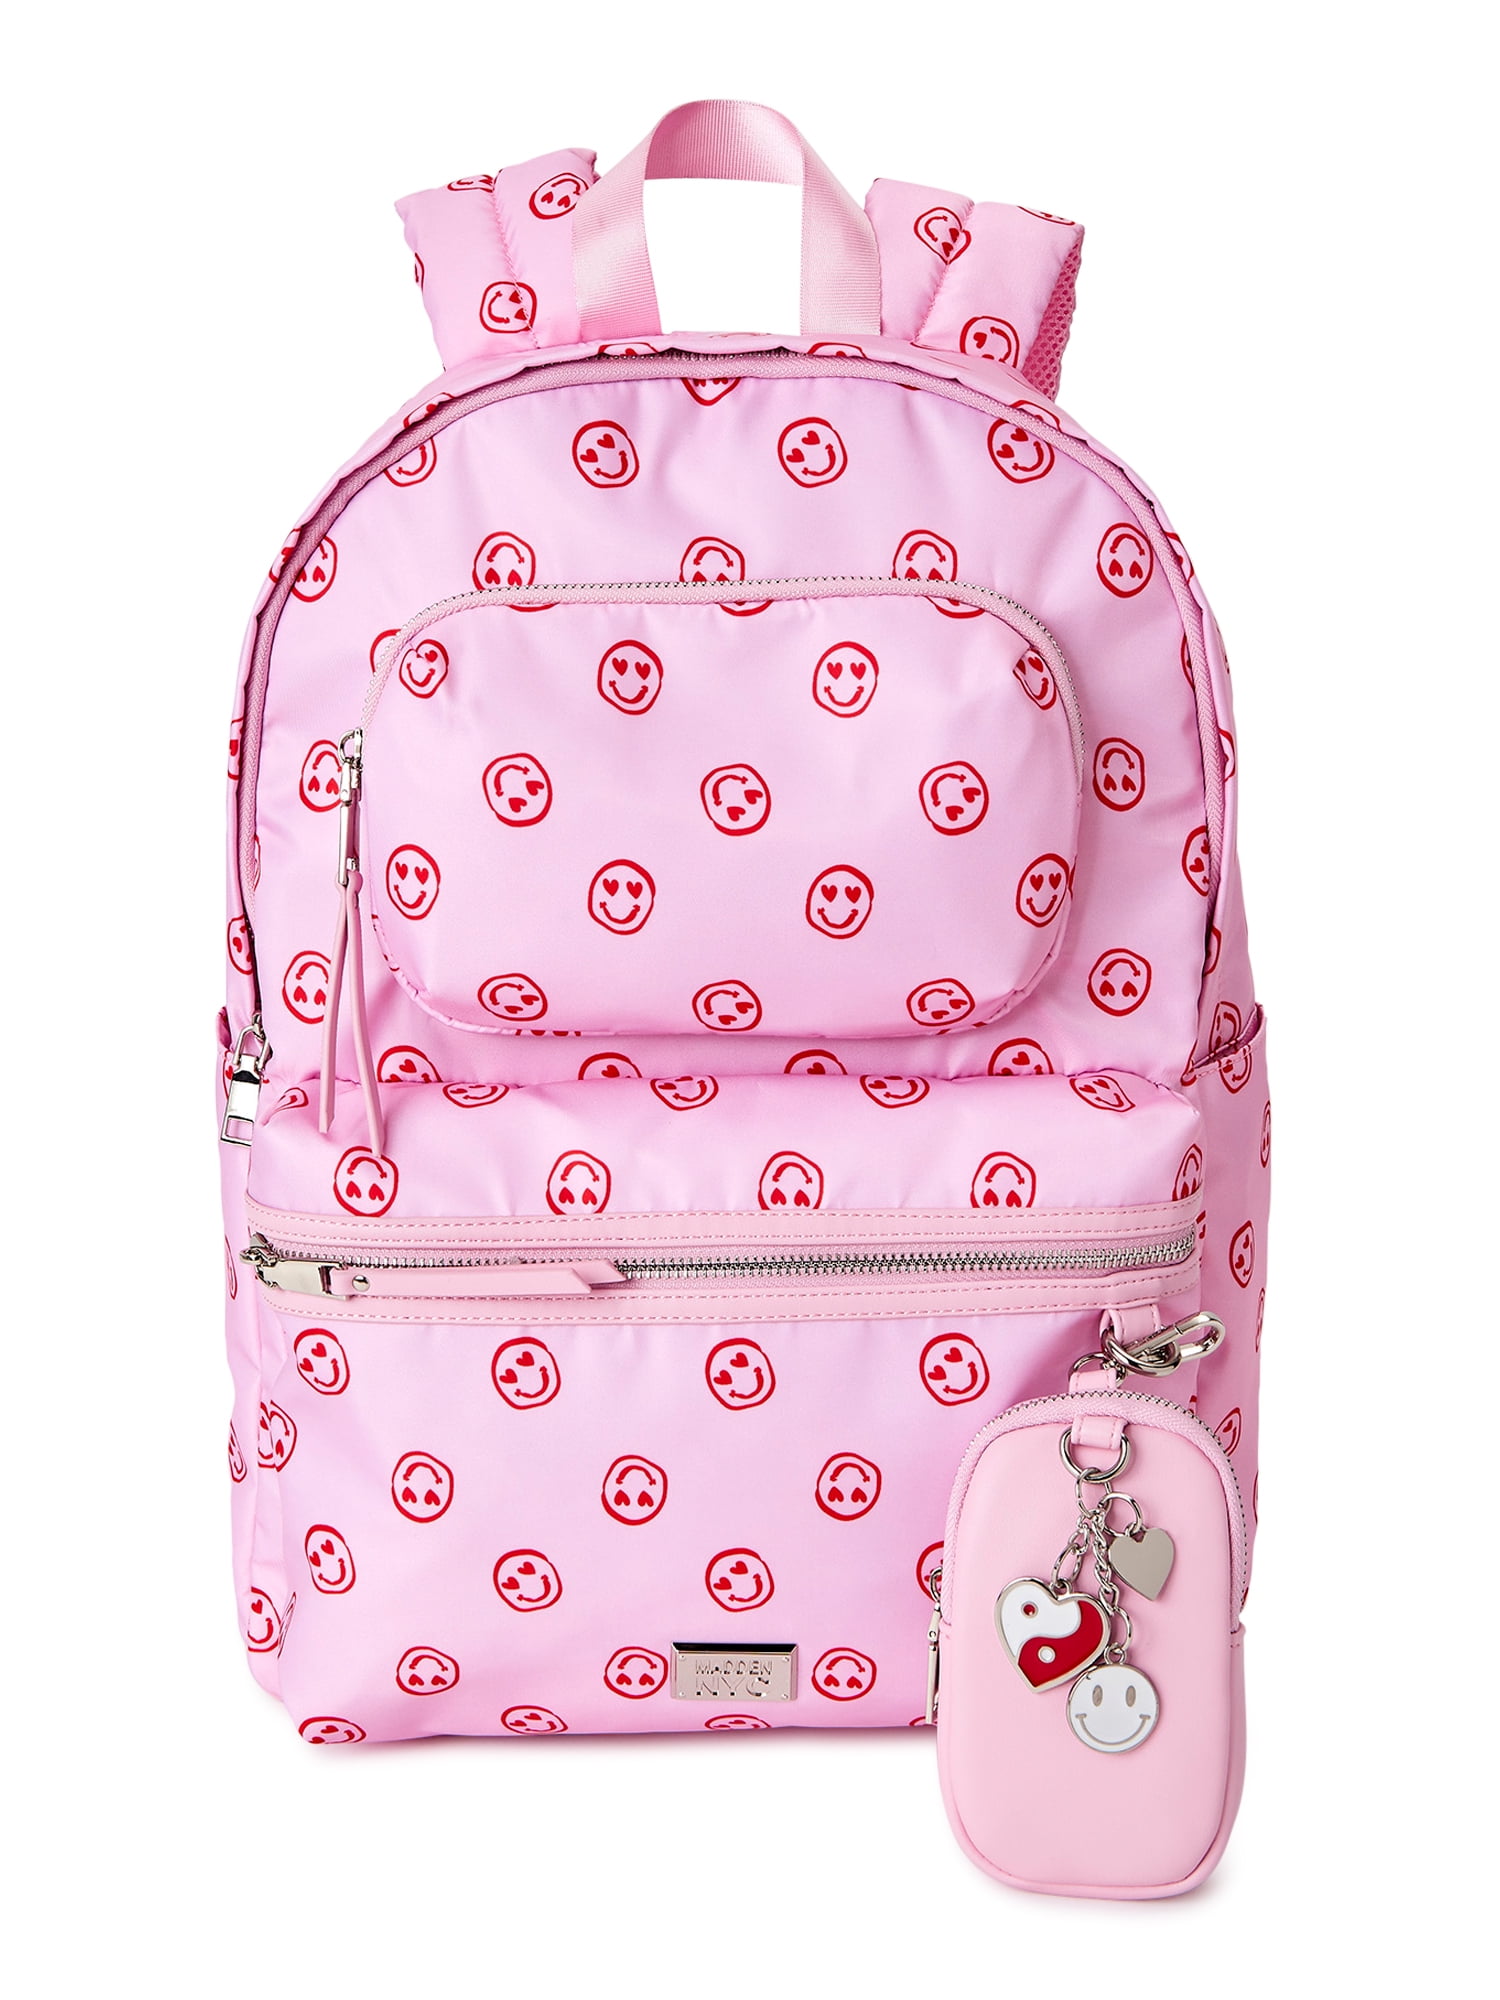 Madden NYC Women’s Modular Zipper Backpack Pink Smiley